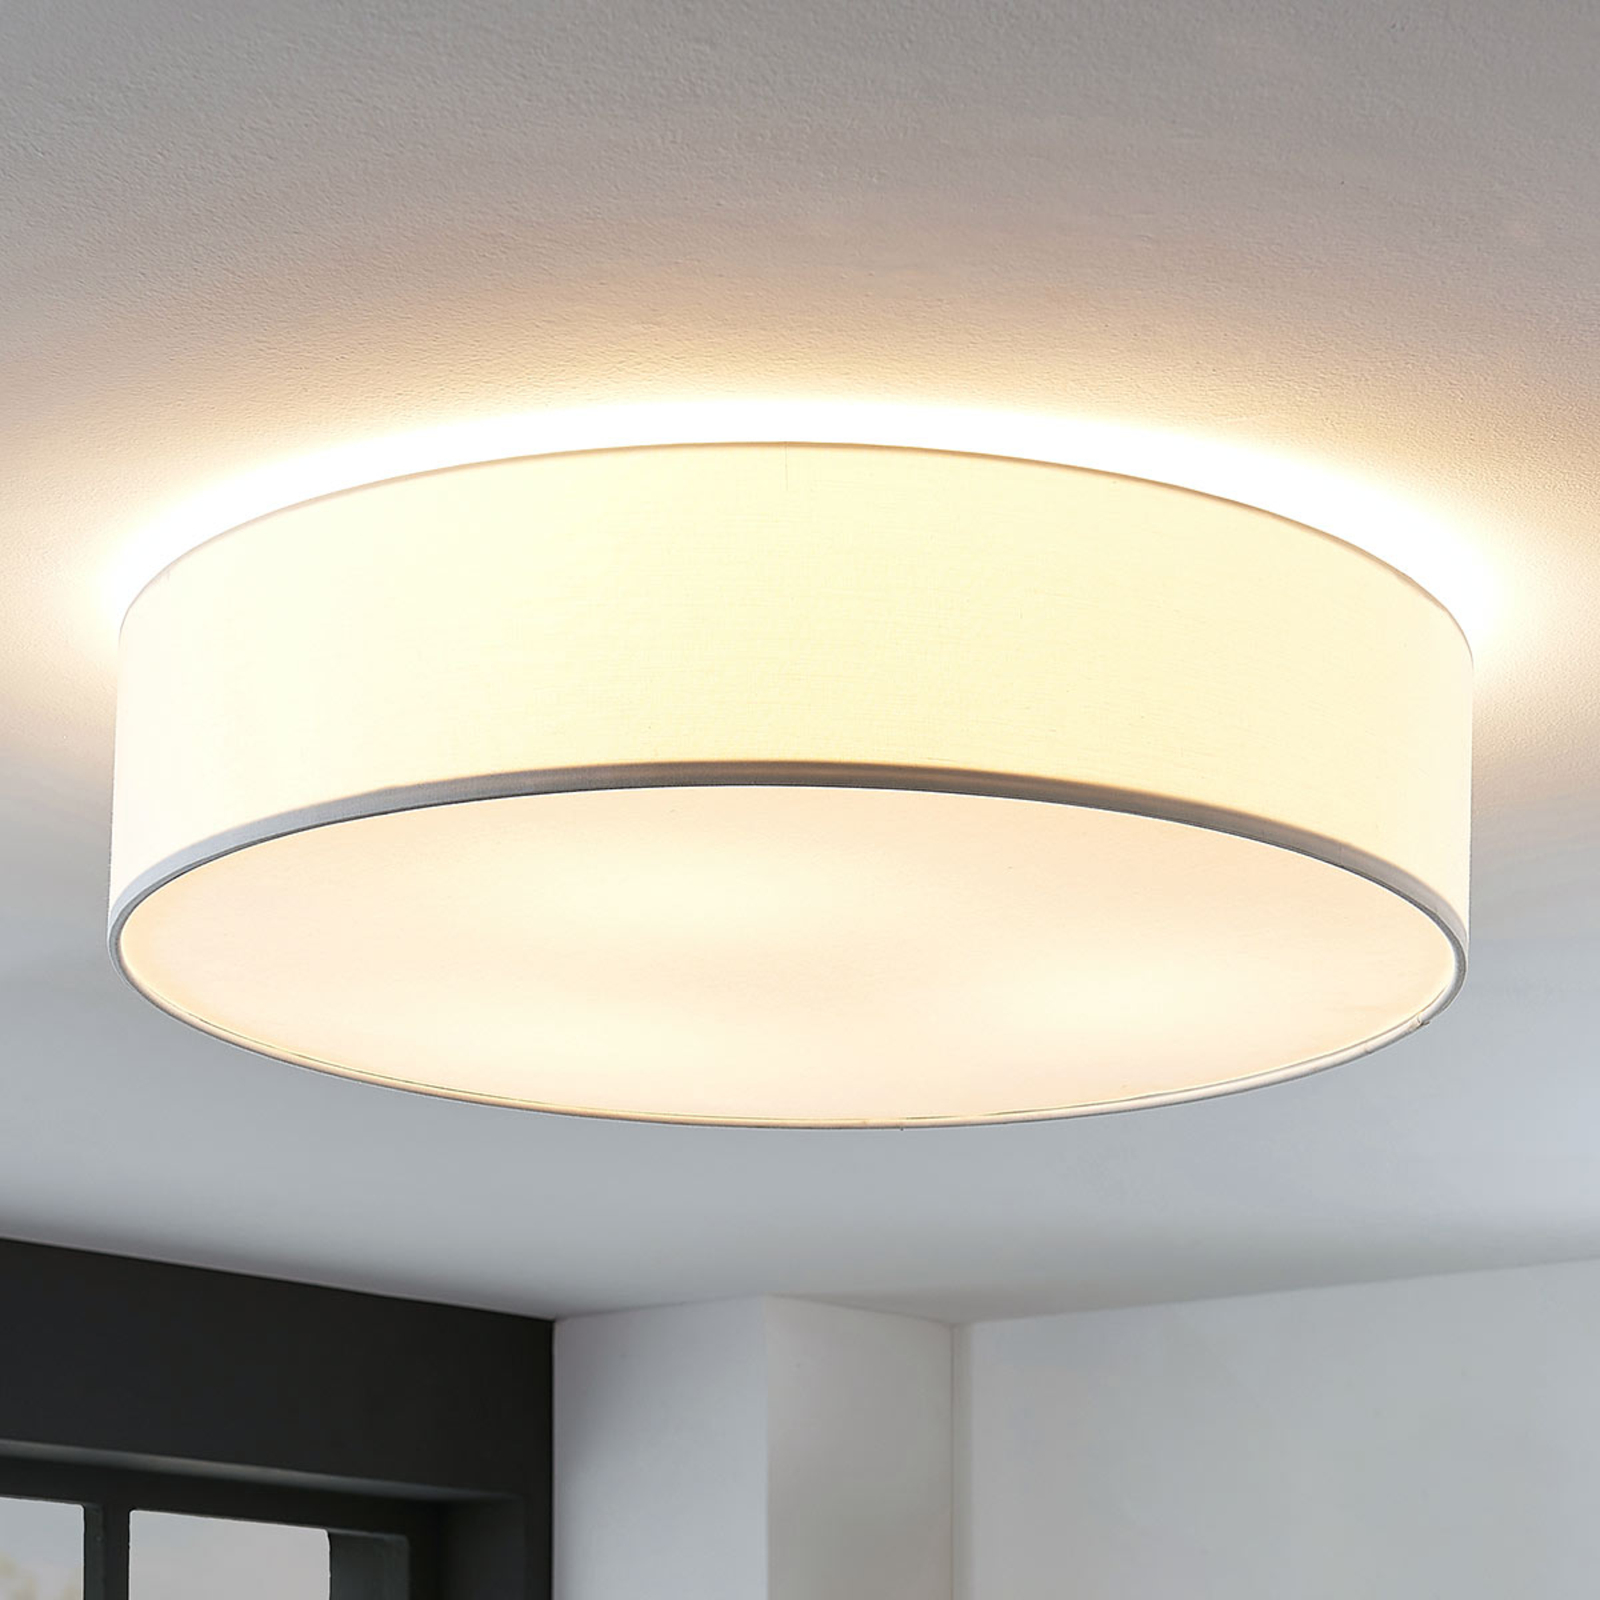 Gordana fabric ceiling lamp in white, 57 cm